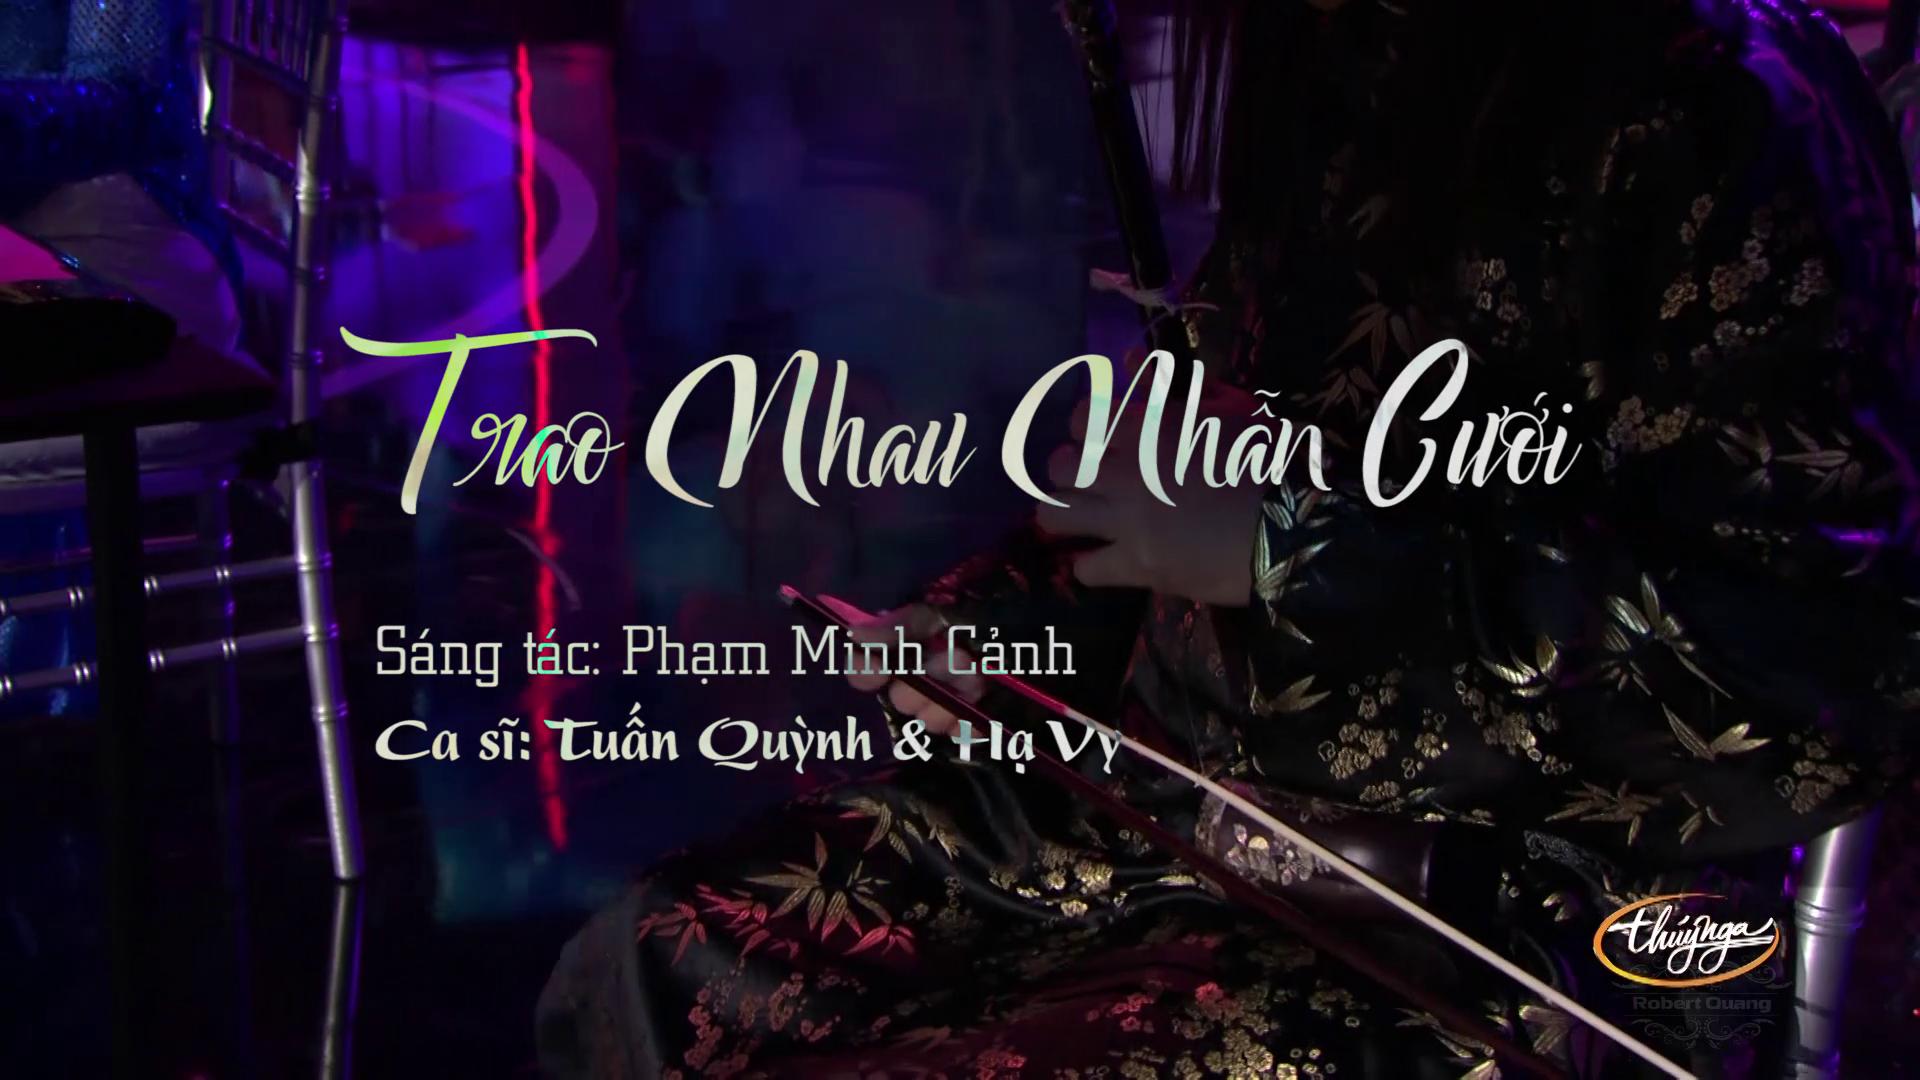 1080P-Trao Nhau Nhan Cuoi - Tuan Quynh ft. Ha Vy [pcm] 31018.jpeg